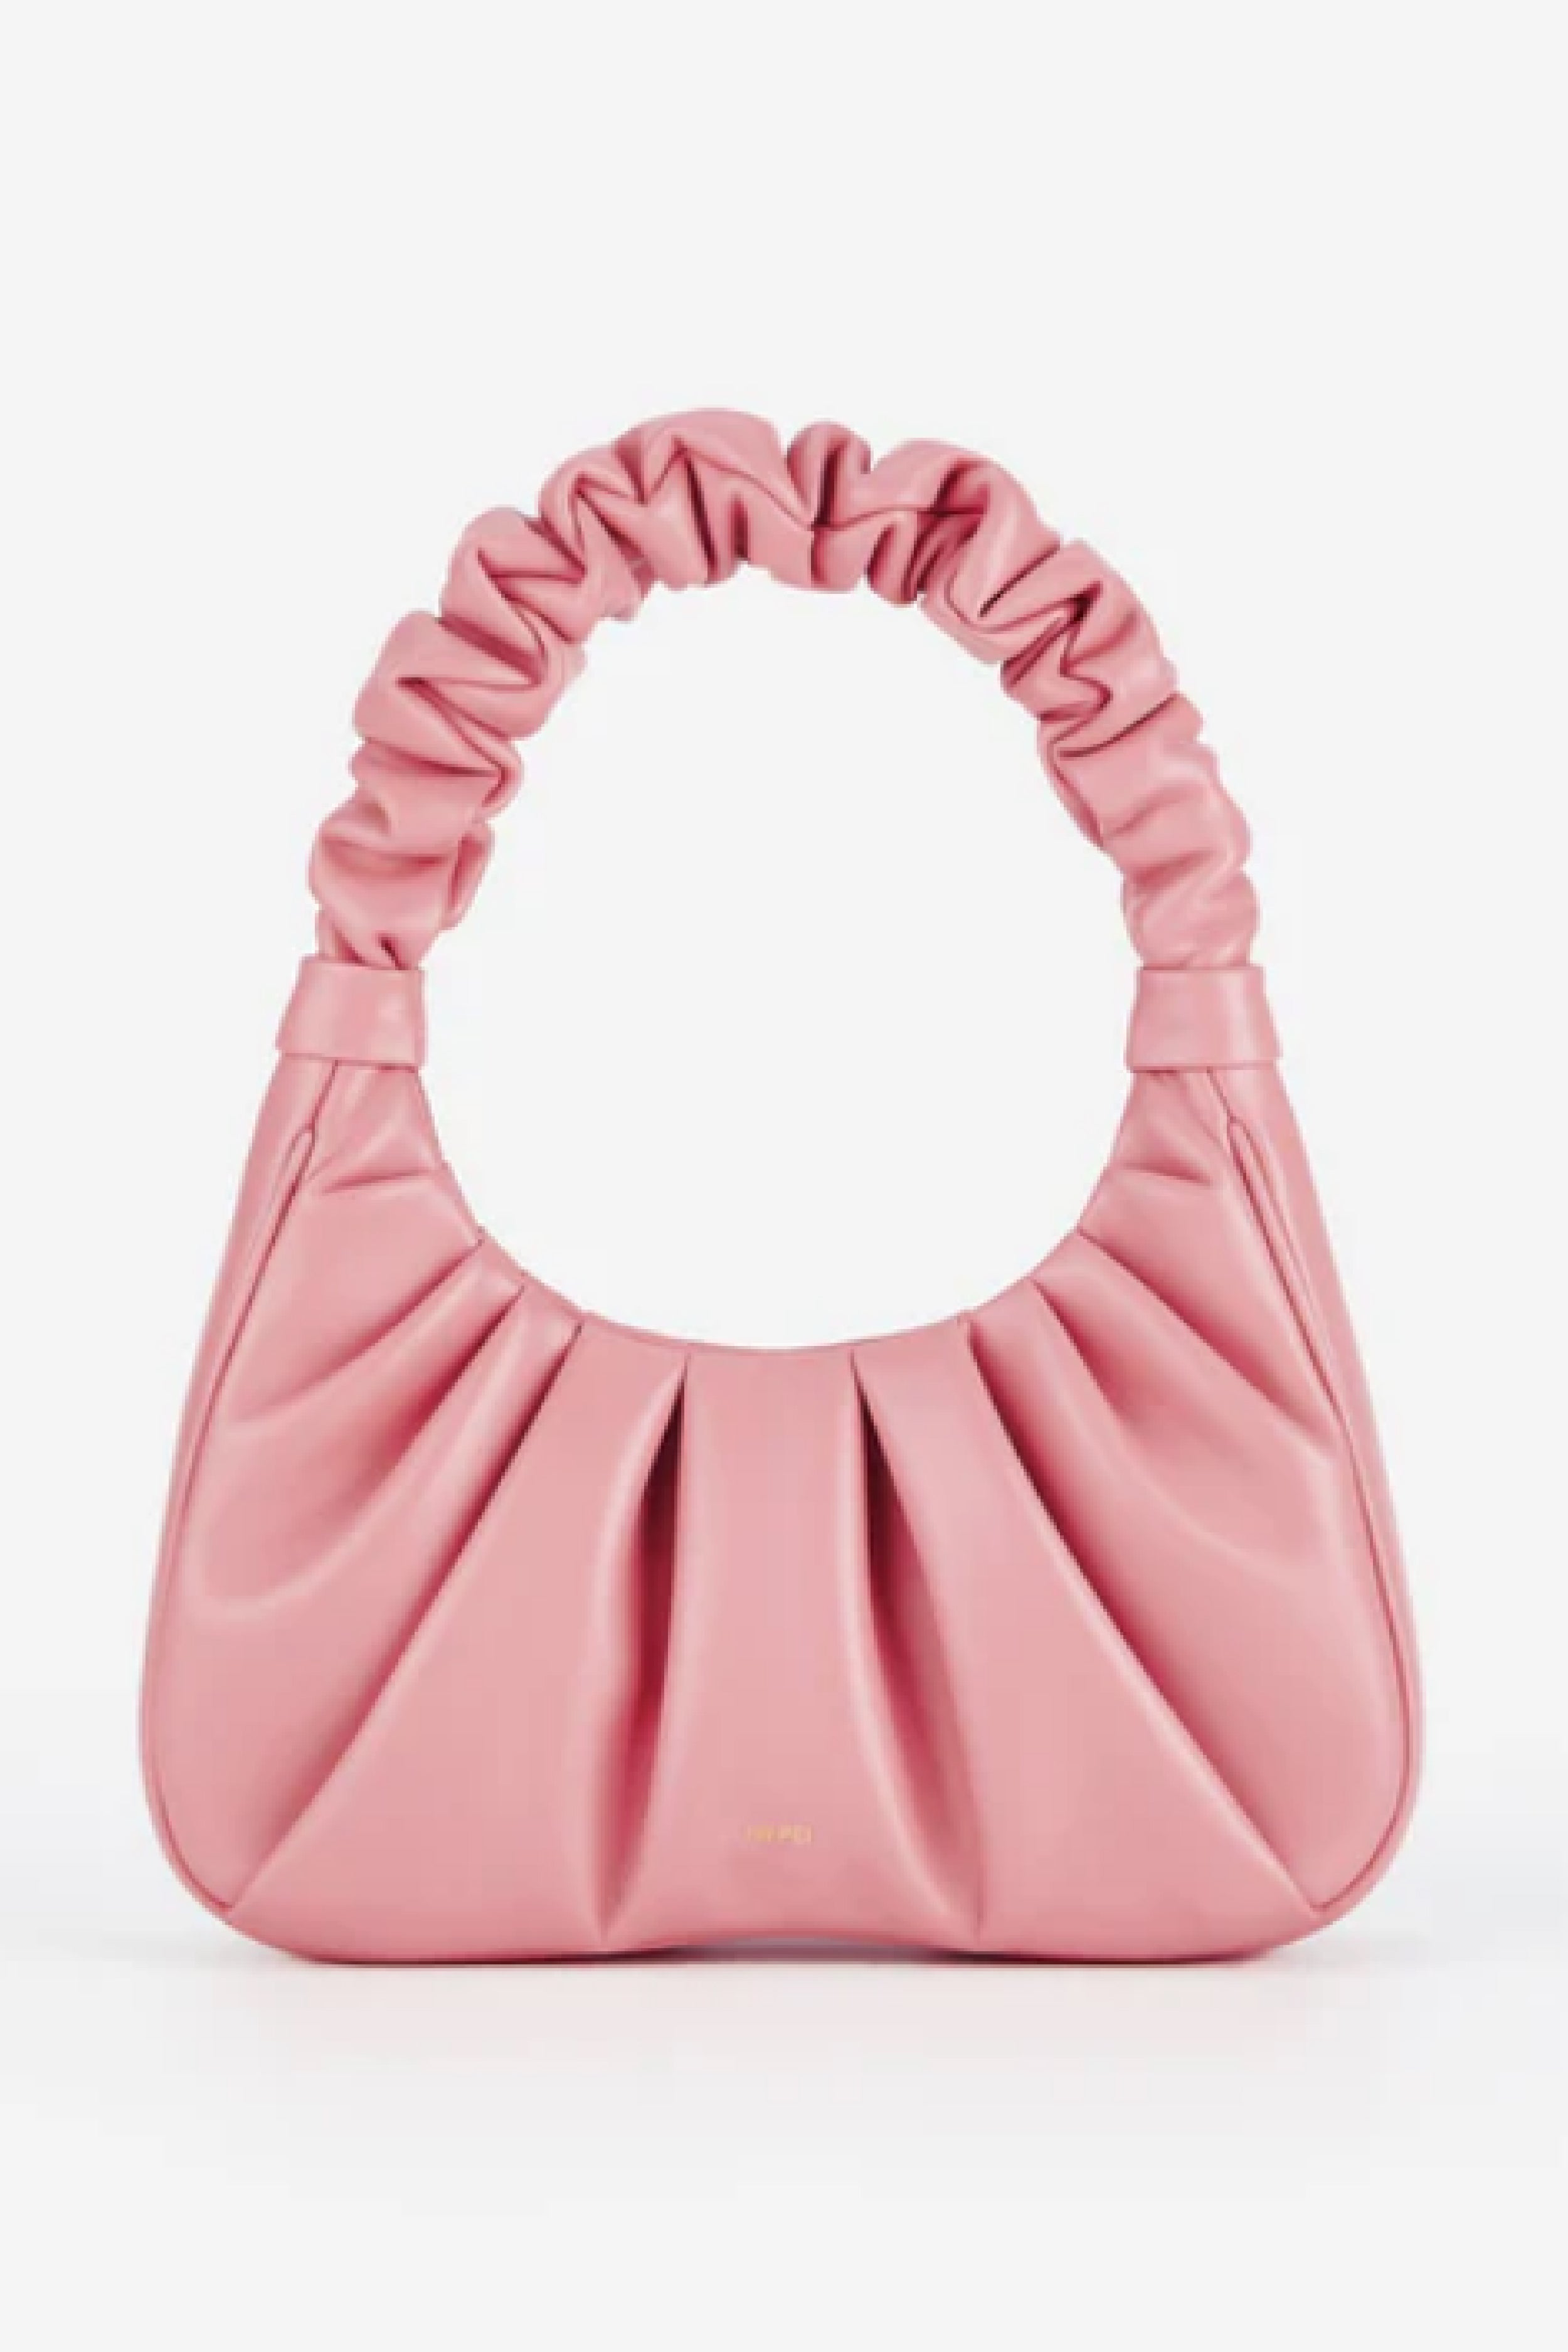 JW PEI Gabbi Bag Light Pink